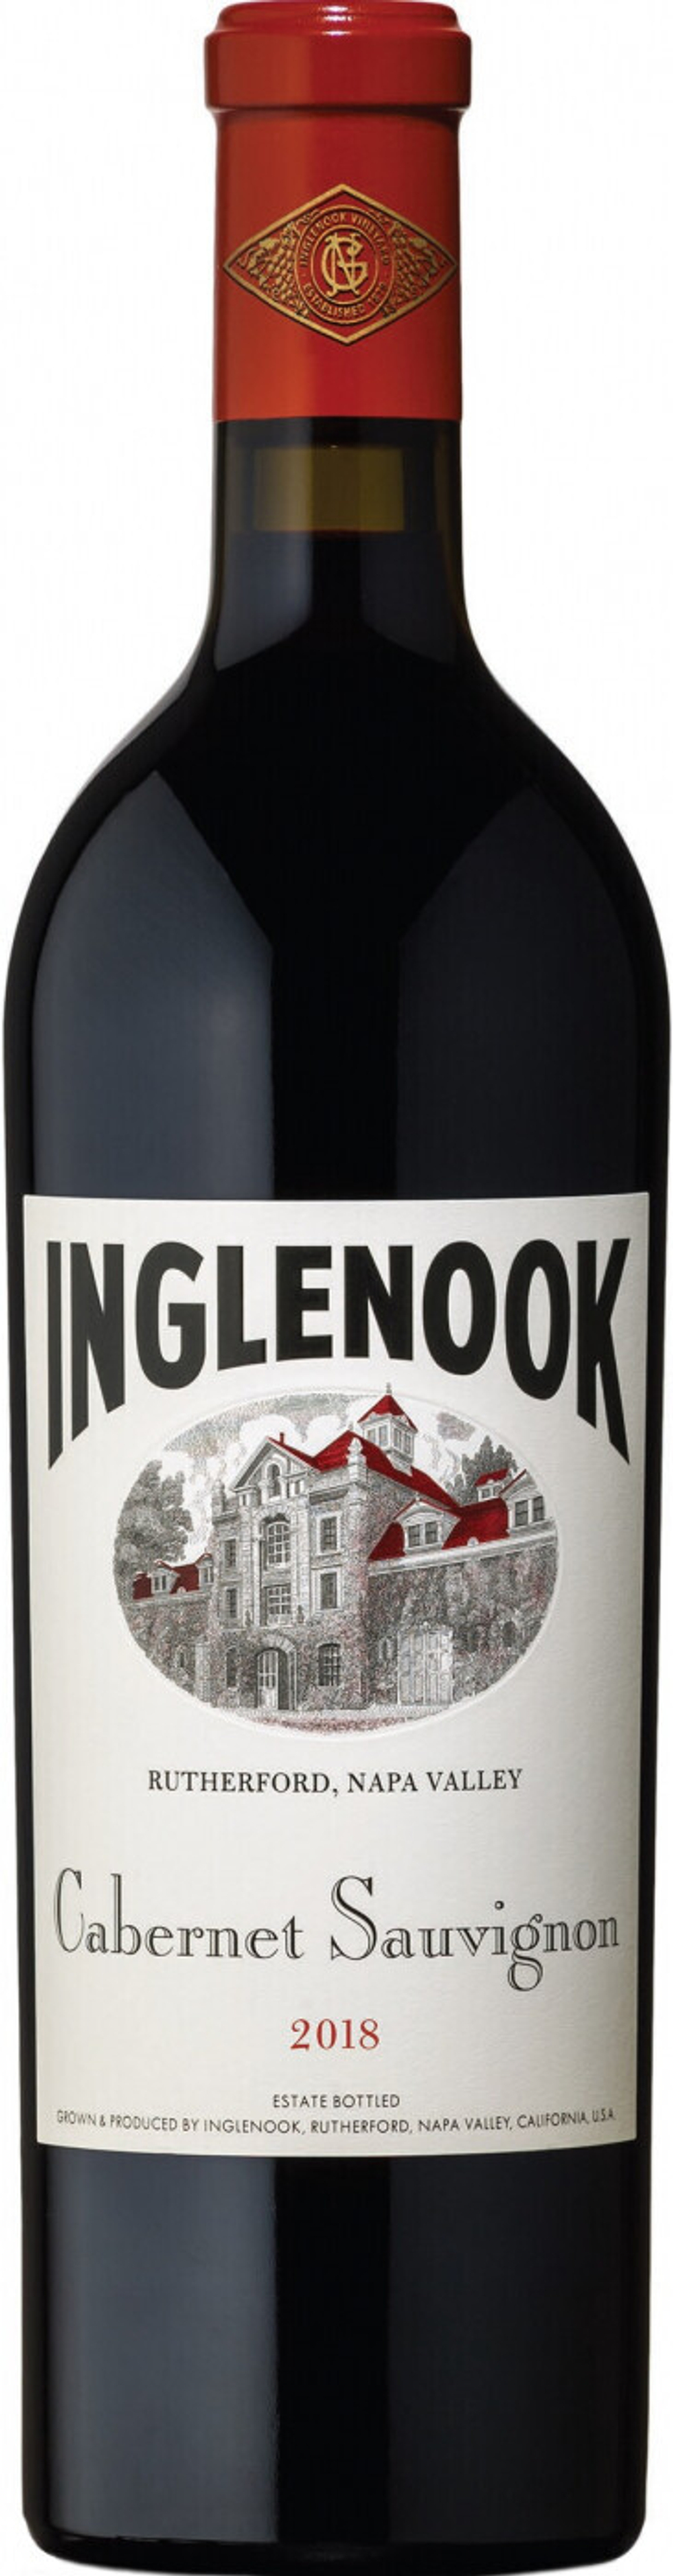 Вино Inglenook Cabernet Sauvignon, 0,75 л.